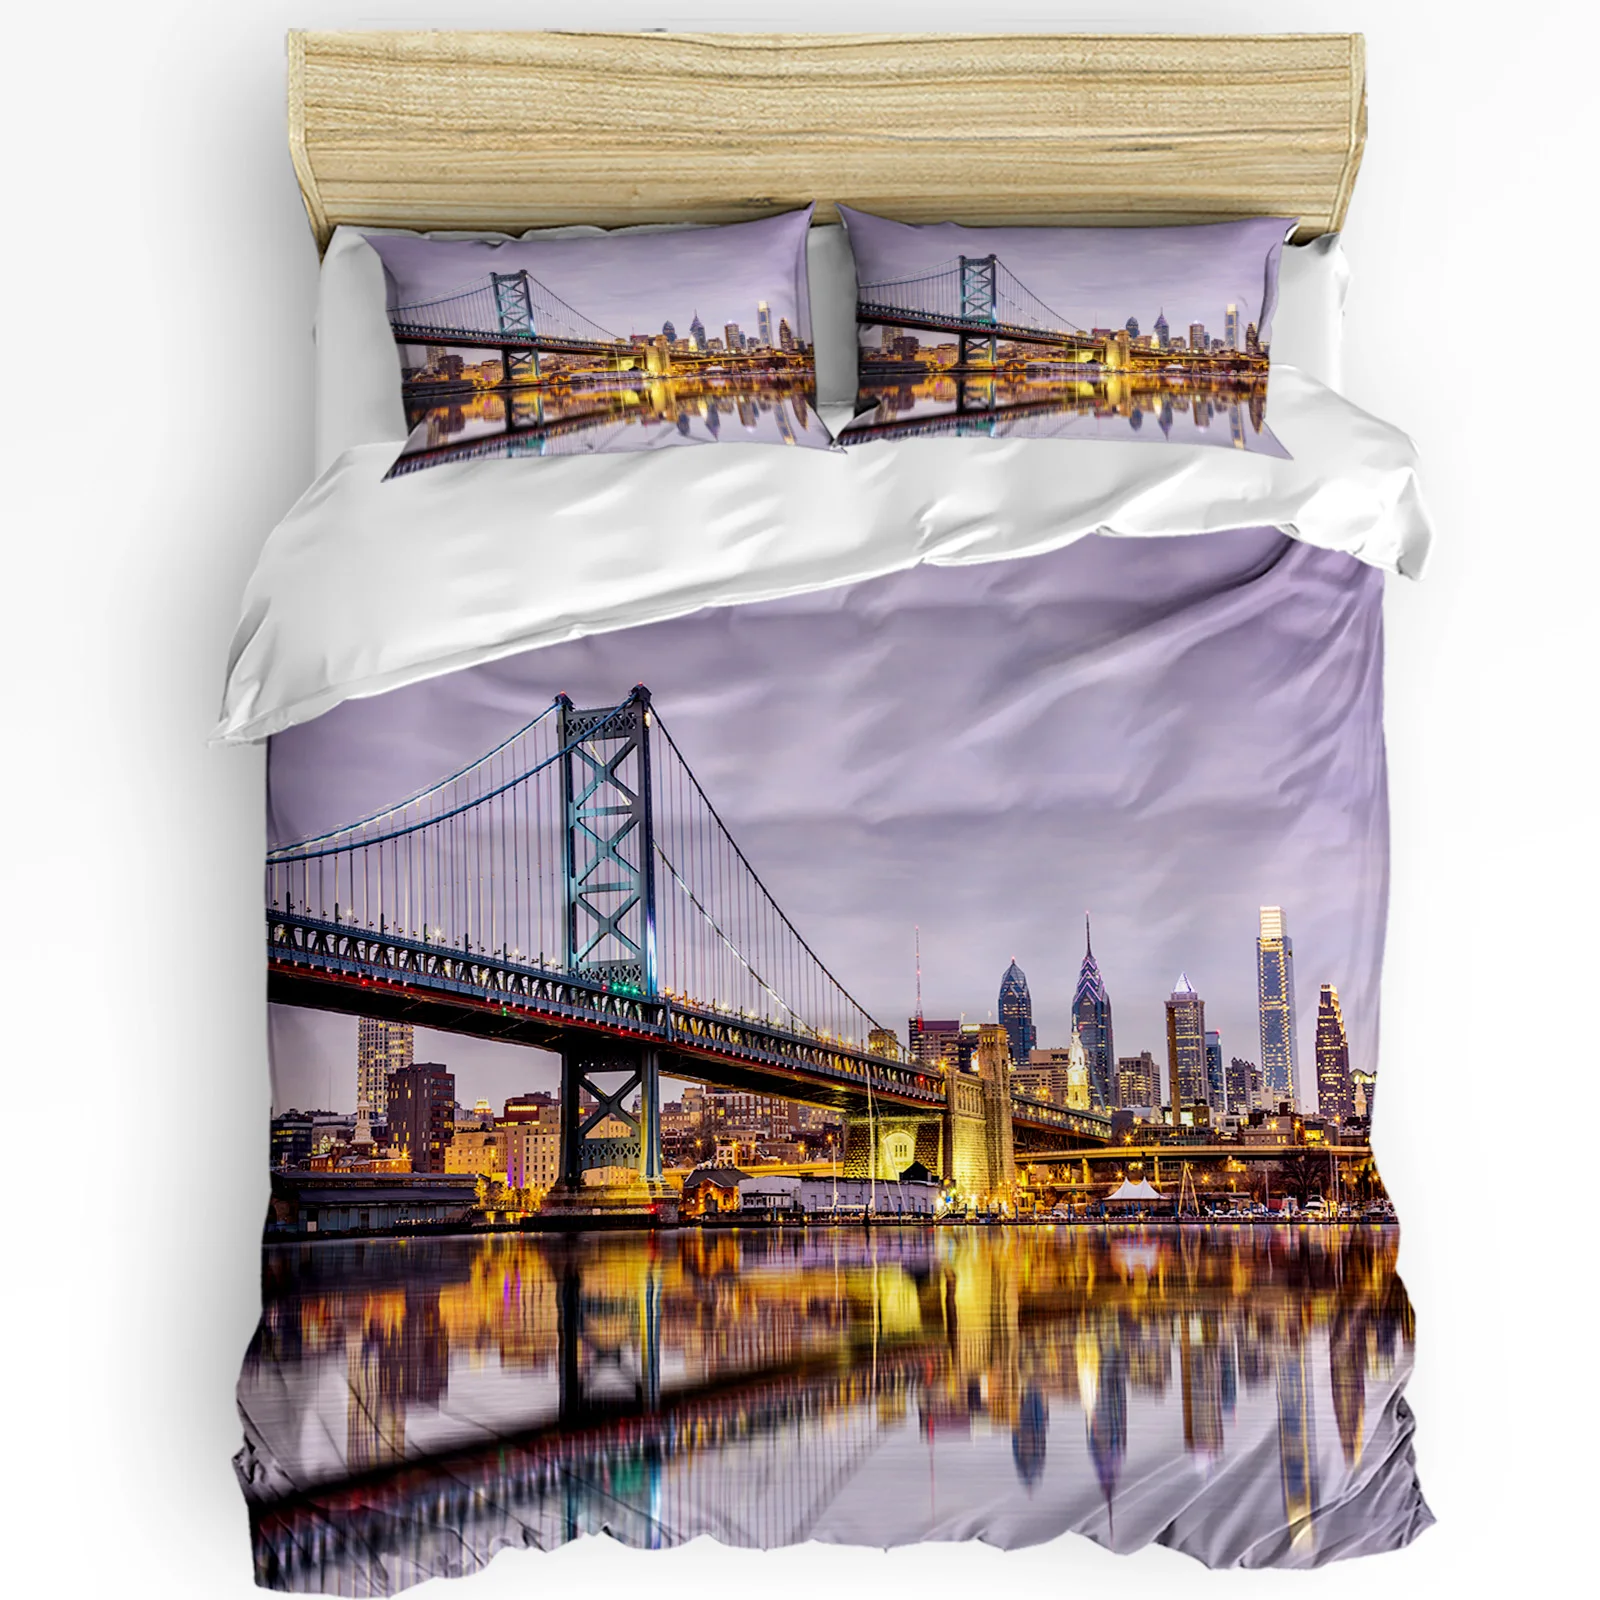 

3pcs Bedding Set United States Urban Bridge Scenery Home Textile Duvet Cover Pillow Case Boy Kid Teen Girl Bedding Covers Set